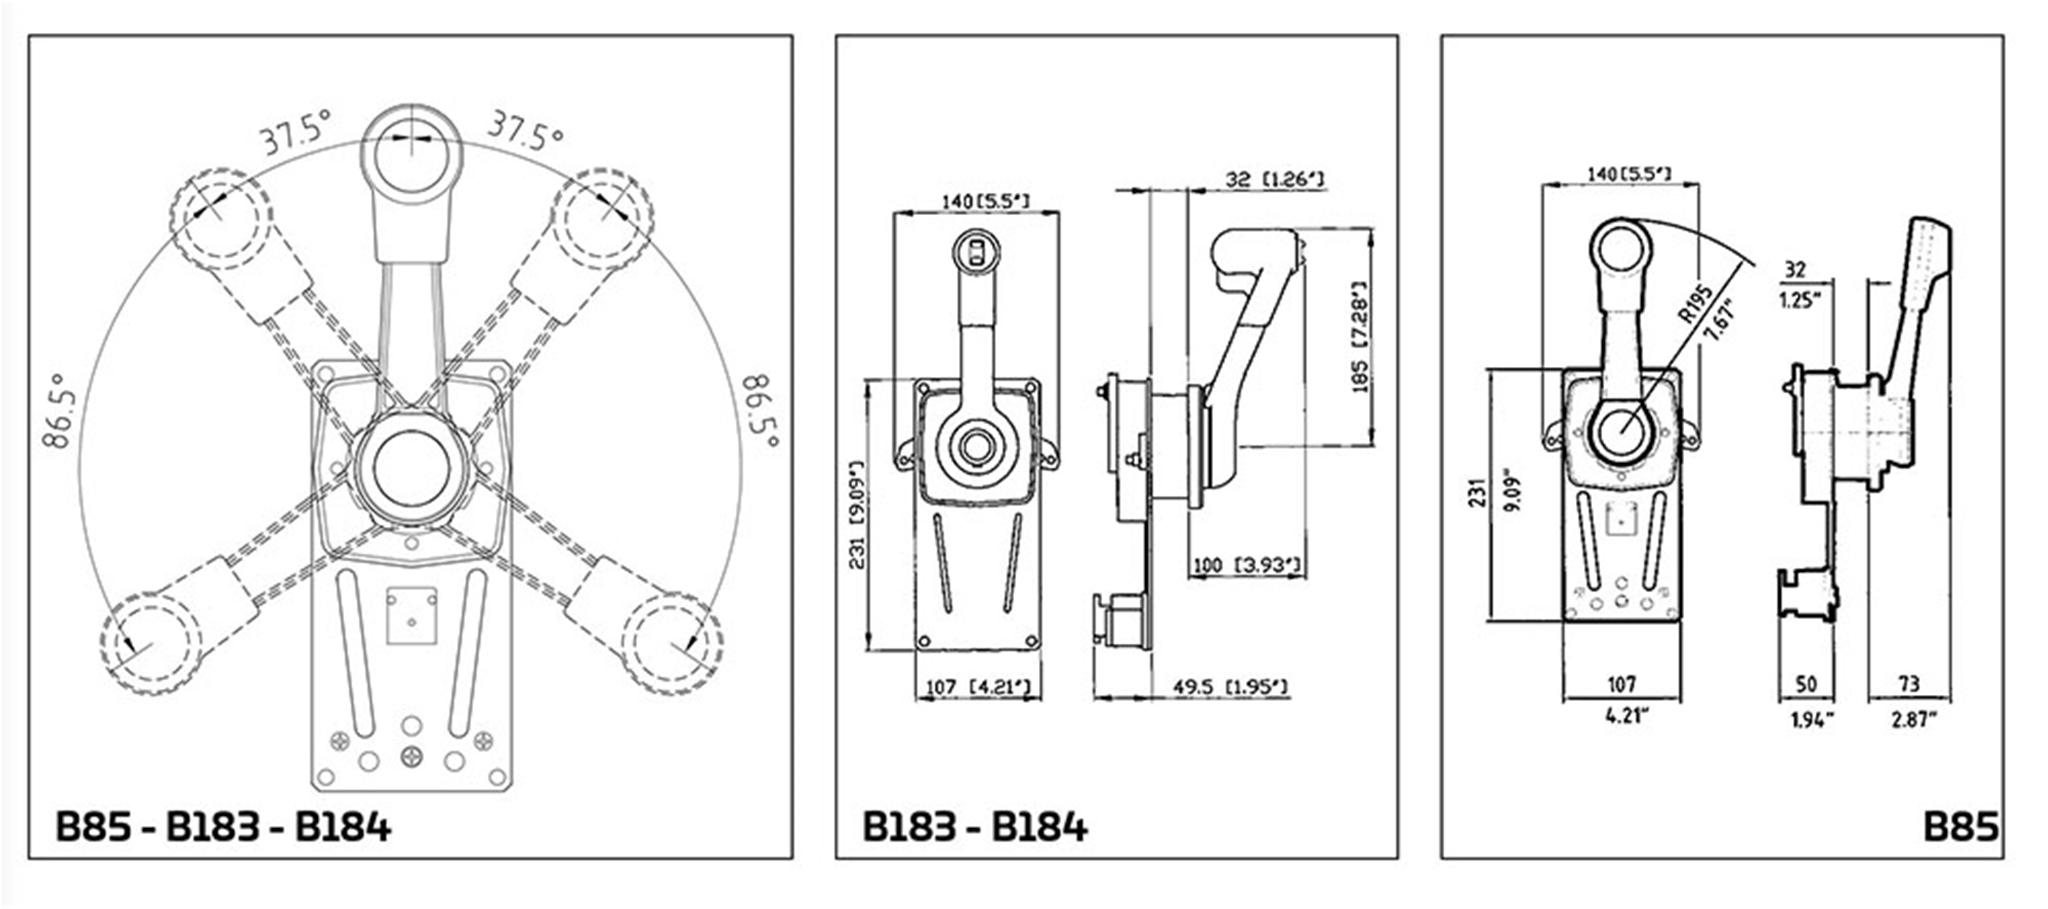 B184 Mercury Specification Controler